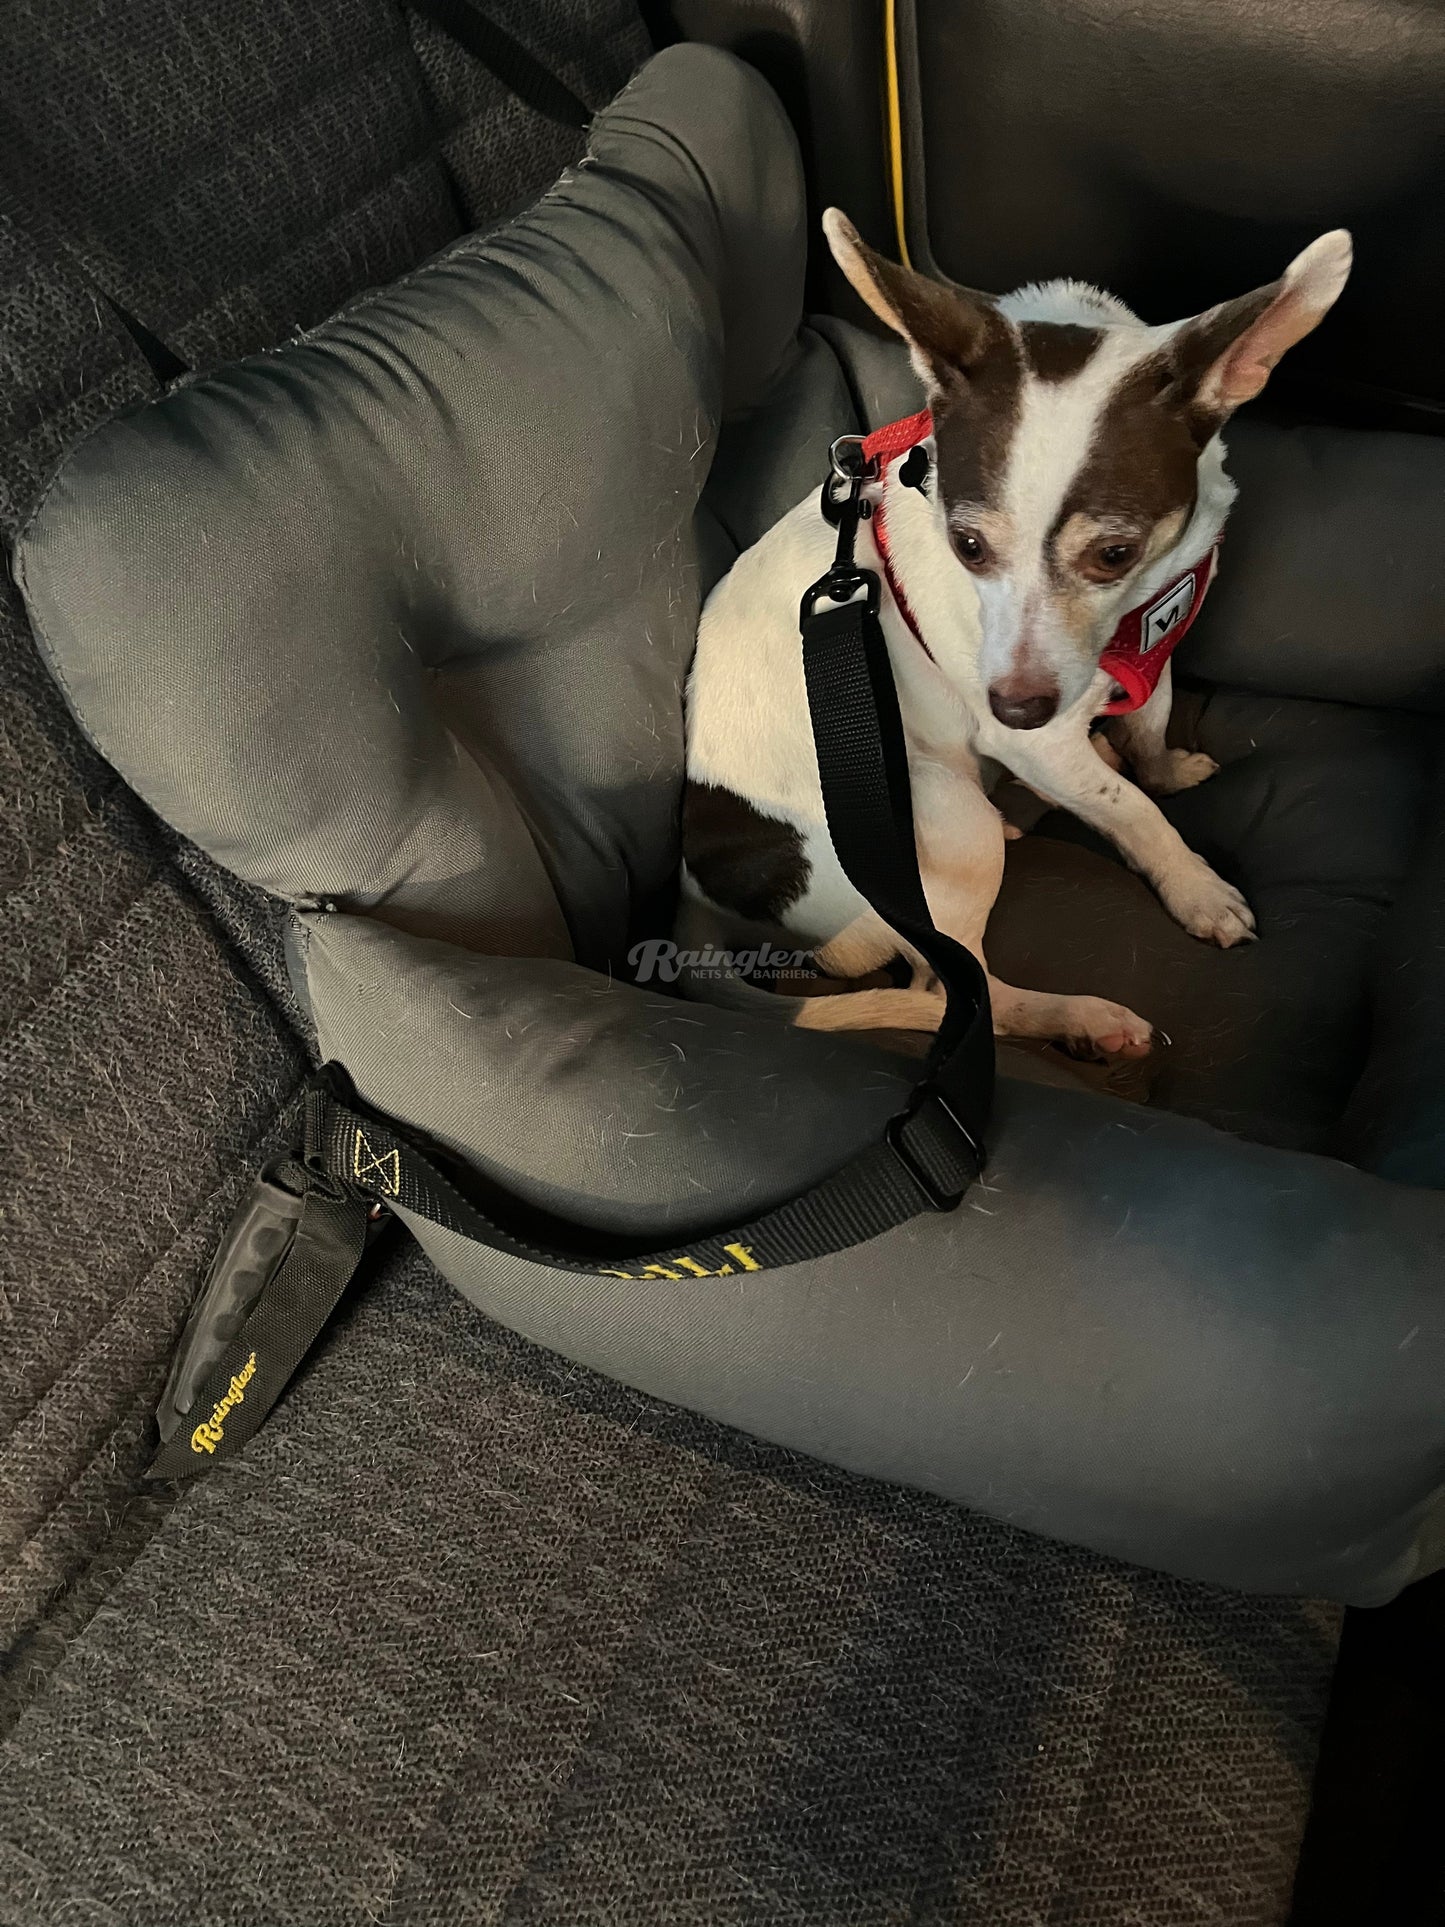 MIL-SPEC Dog Leash with Seatbelt Snap in Retainer-Raingler